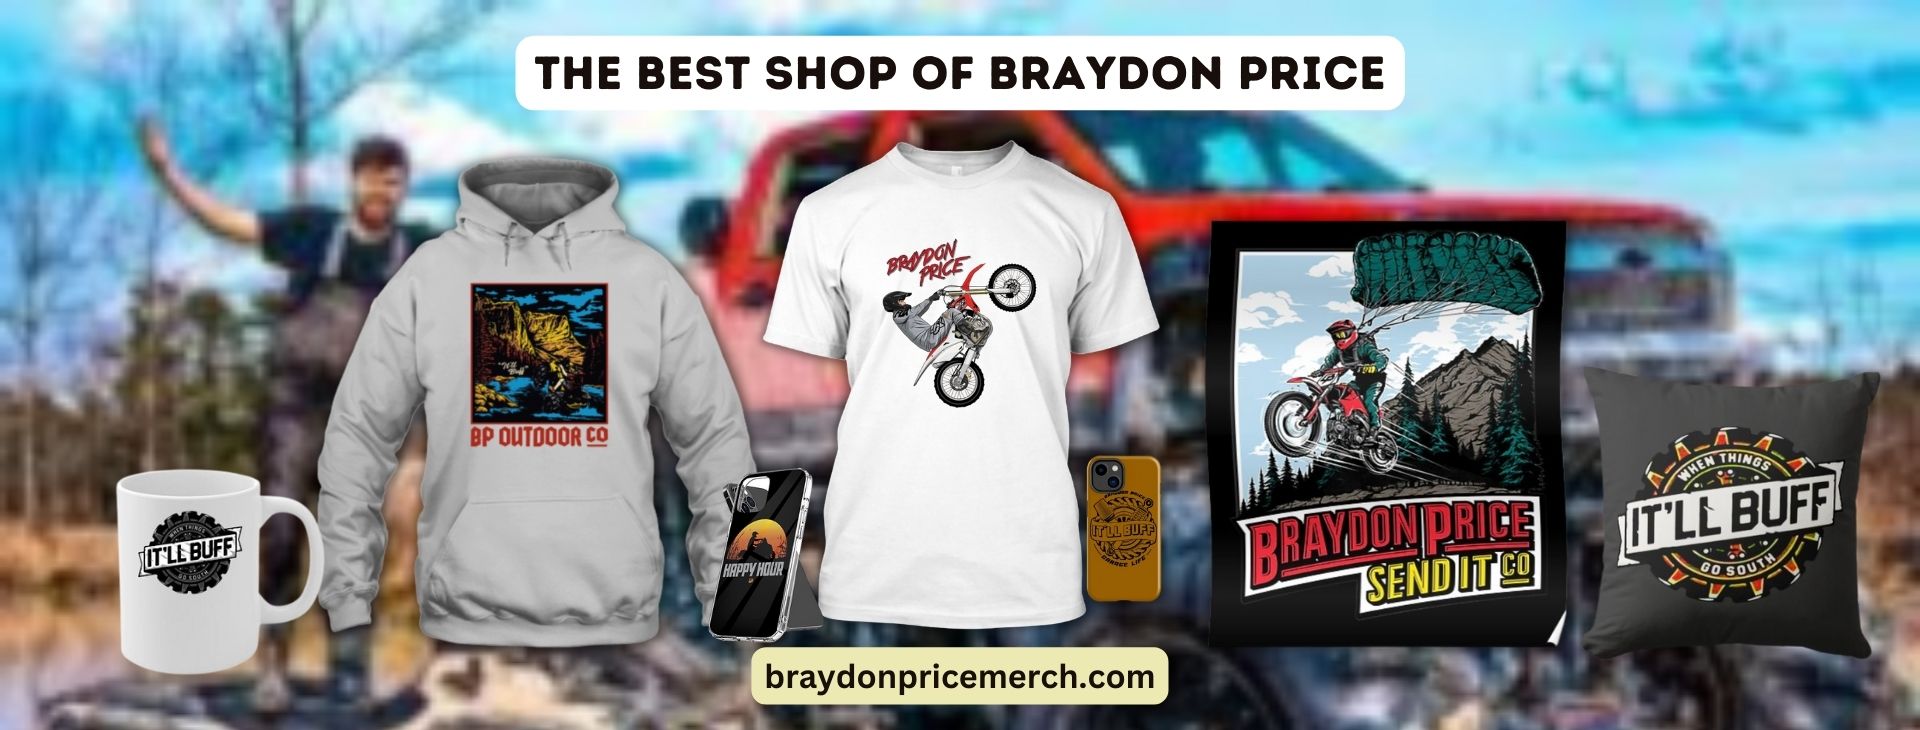 braydonprice BANNER - Braydon Price Store